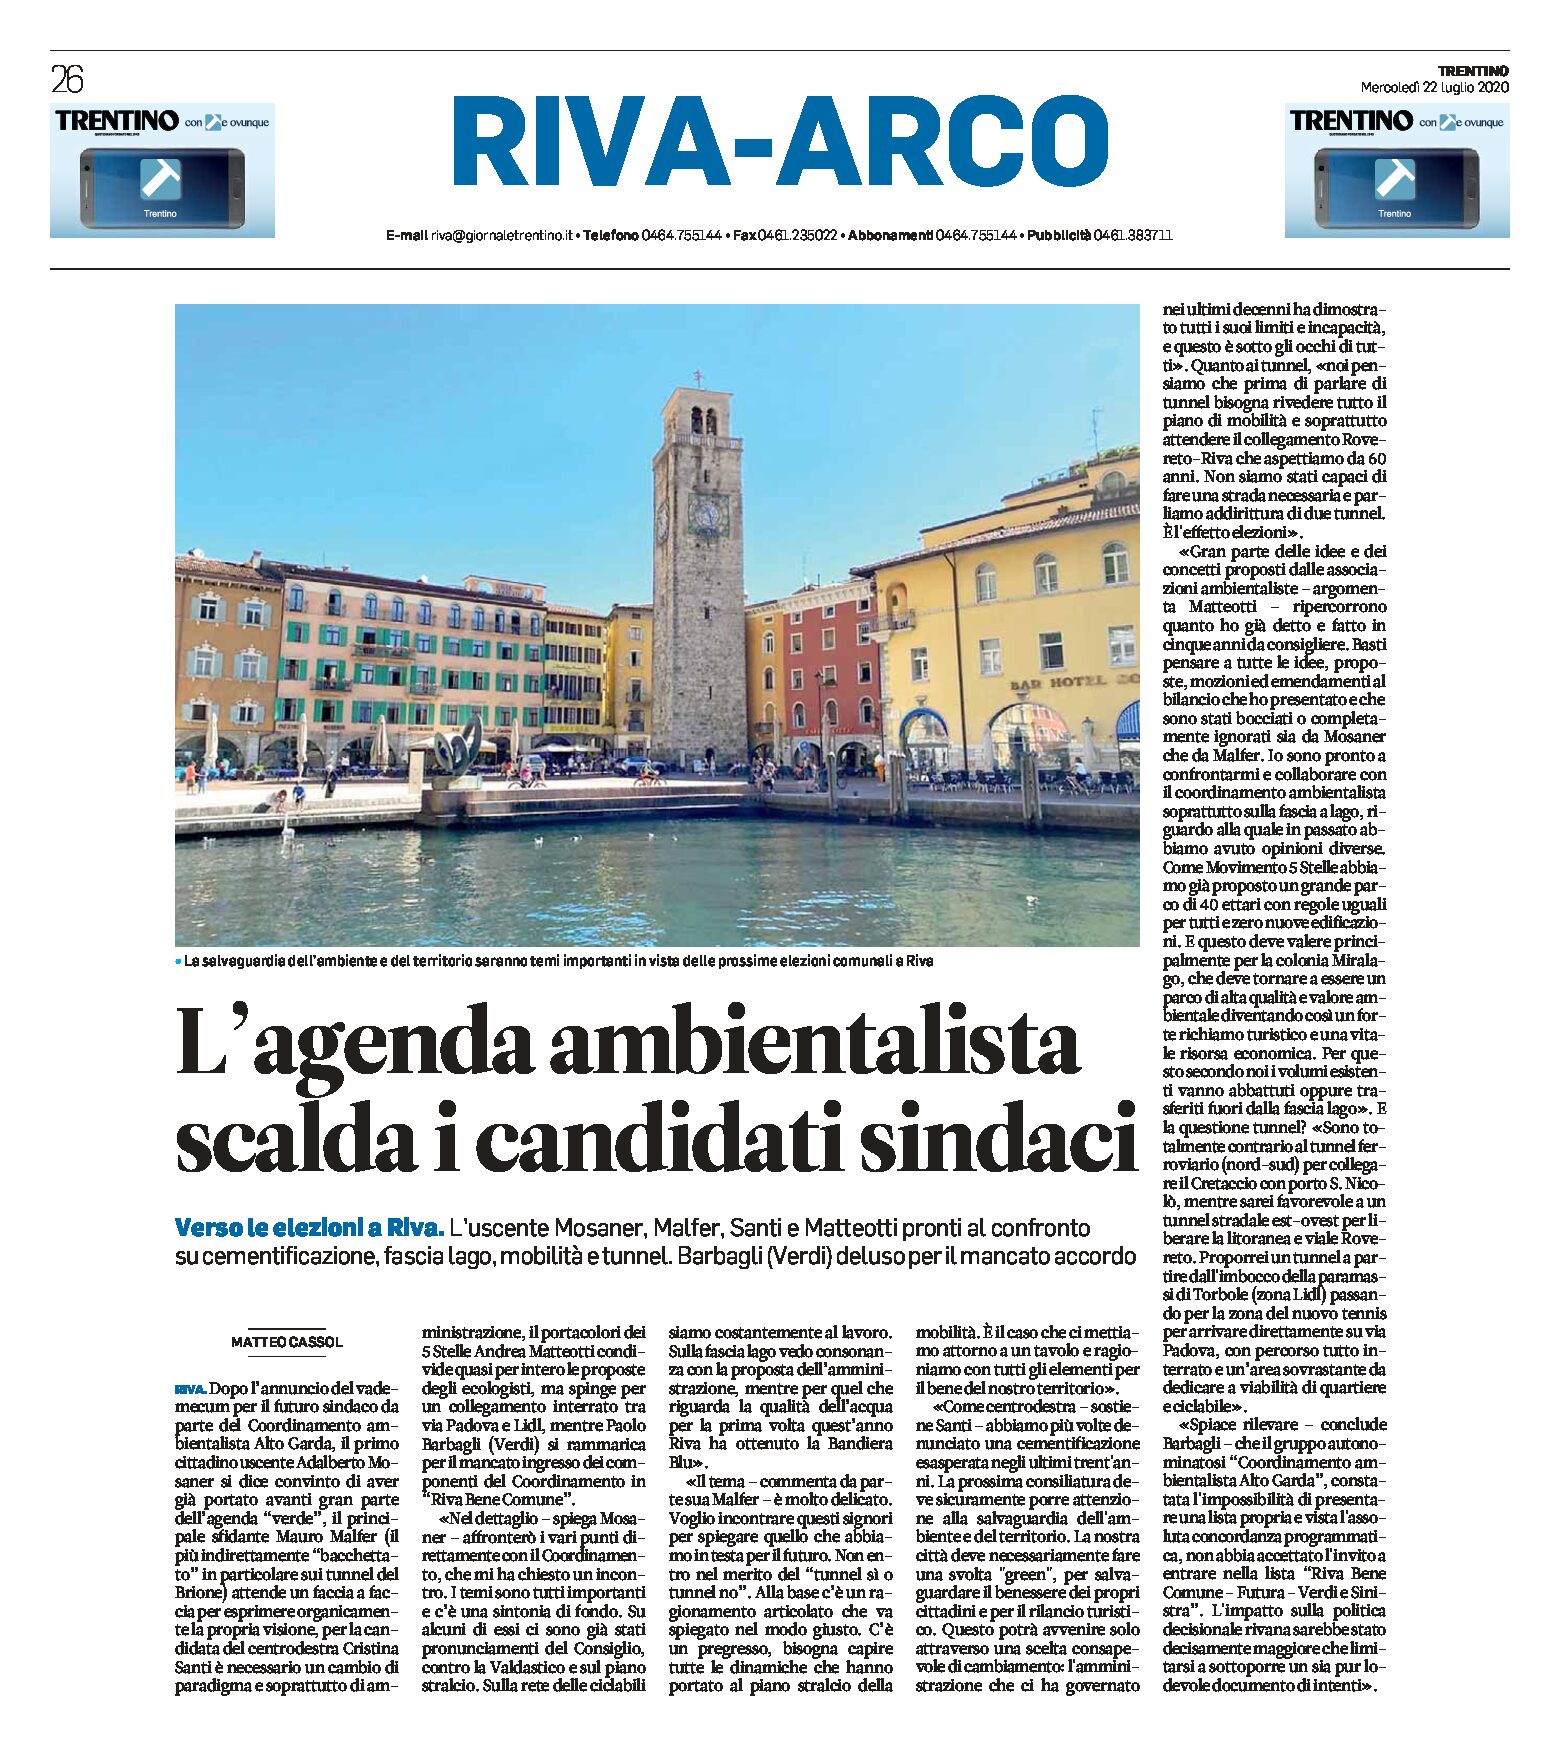 Riva: l’agenda ambientalista scalda i candidati sindaci